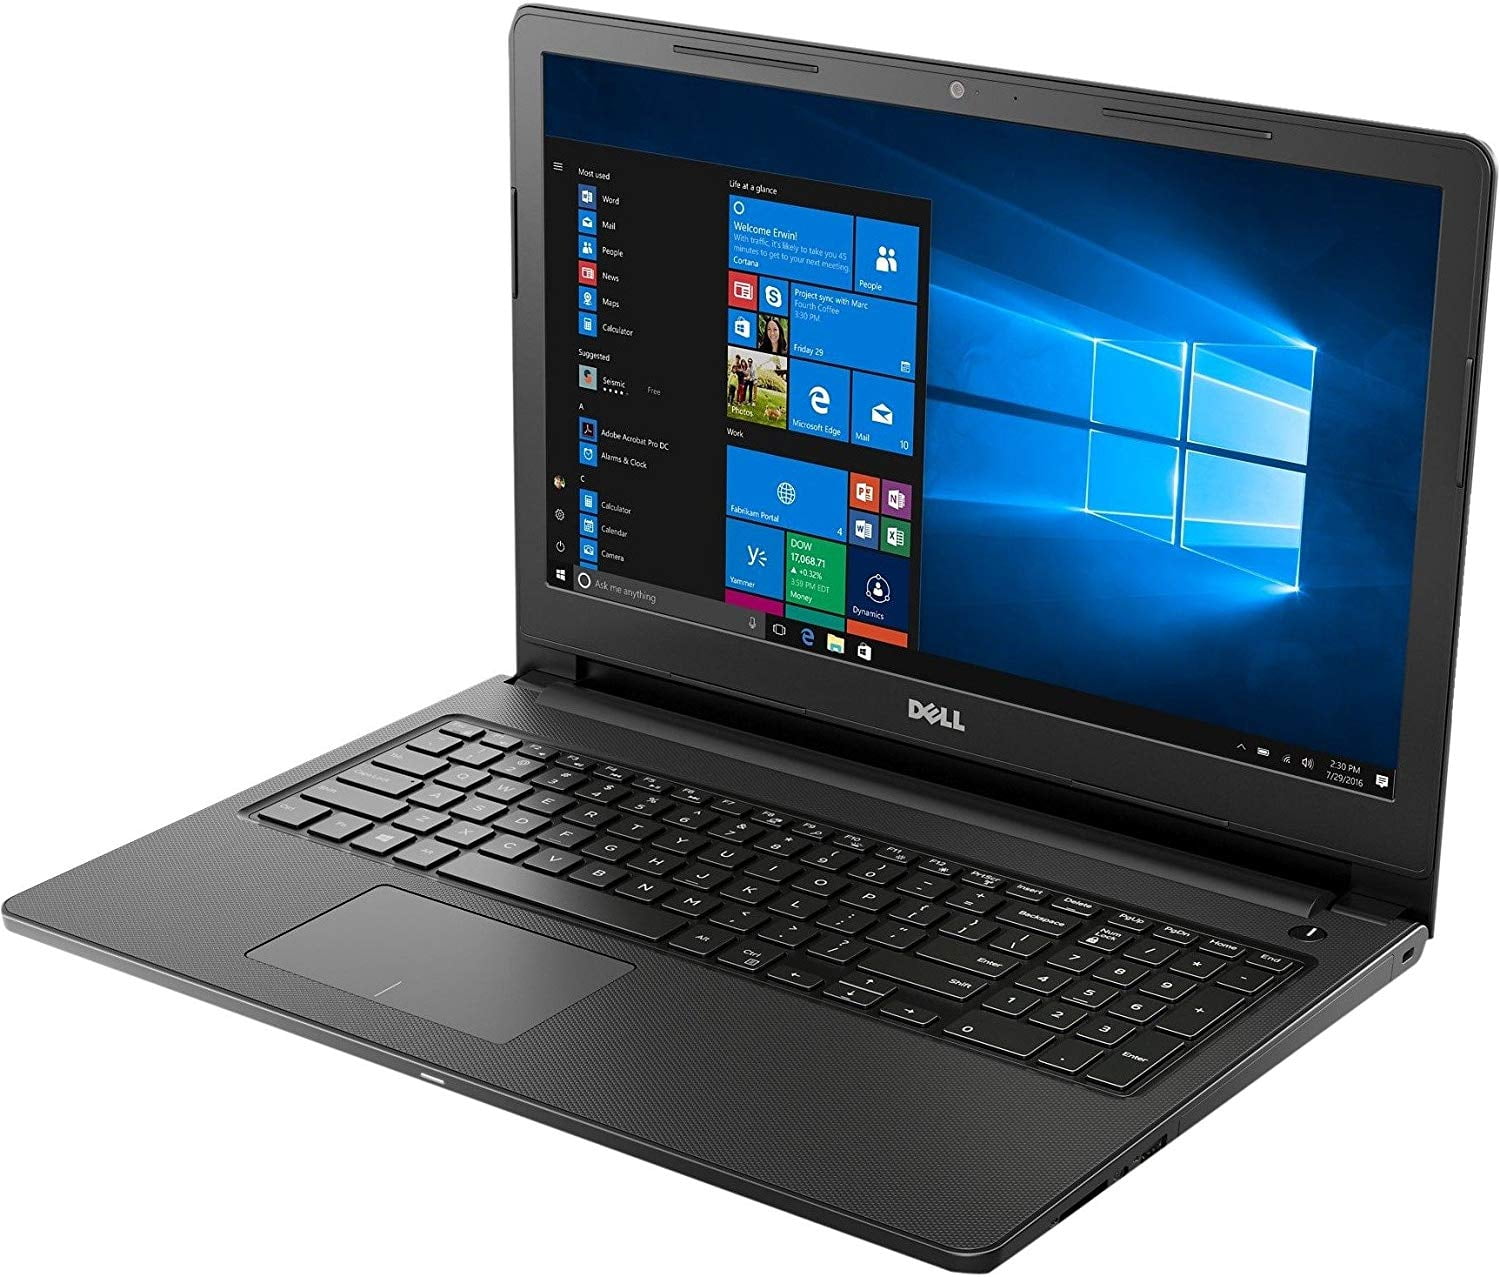 2018 New Dell Inspiron 15 3000 15.6" FHD AntiGlare LEDBacklit Laptop Computer, Intel Core i5